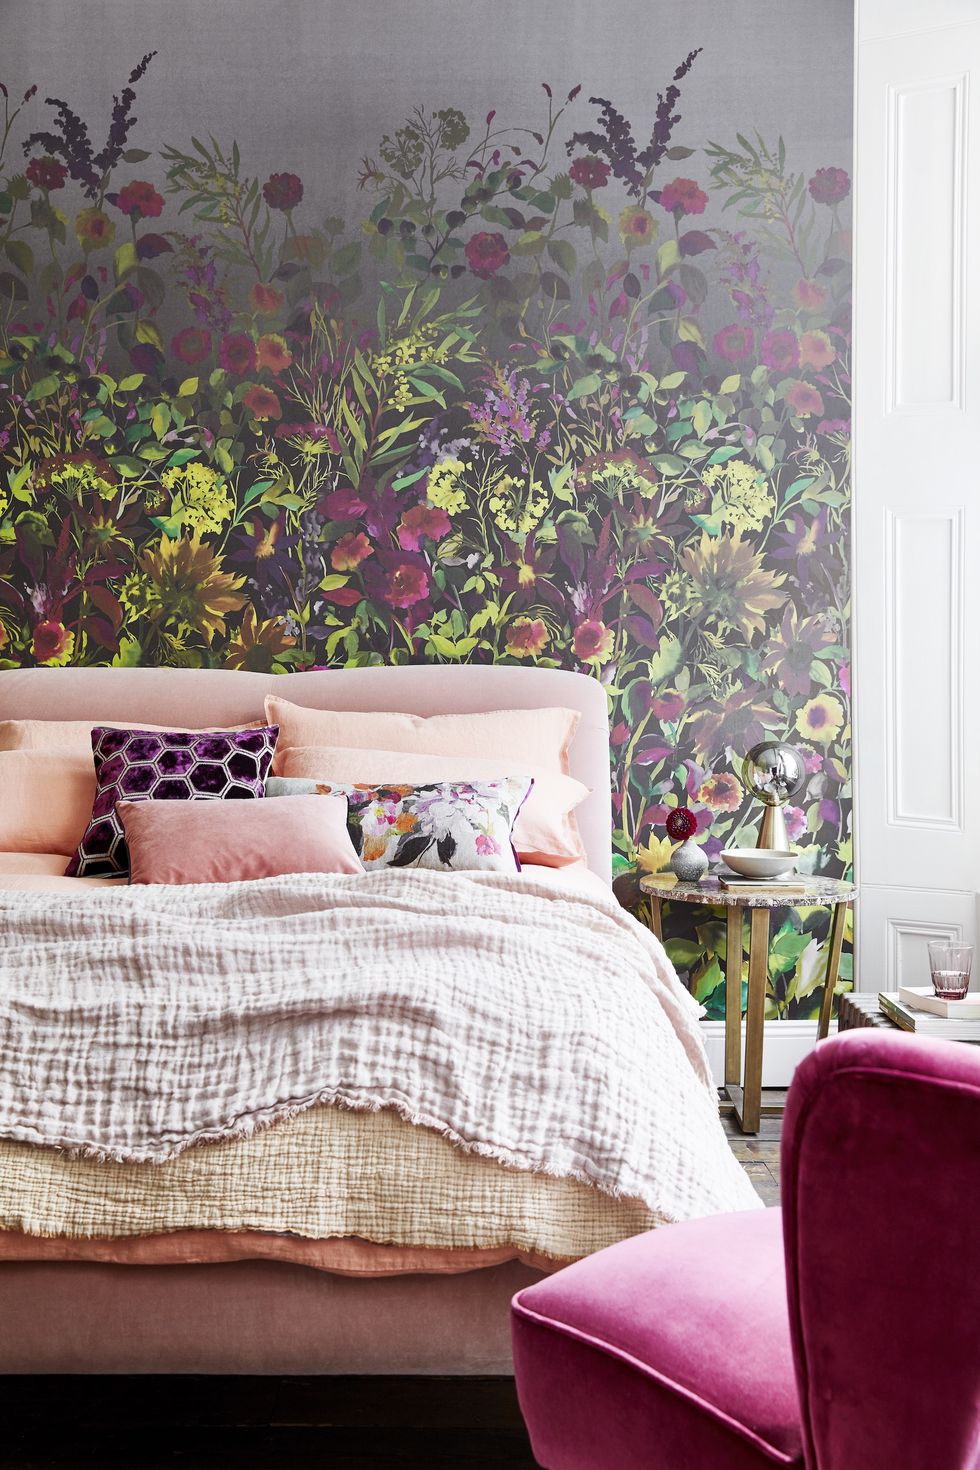 diy headboard ideas bedroom interior with scenic mural